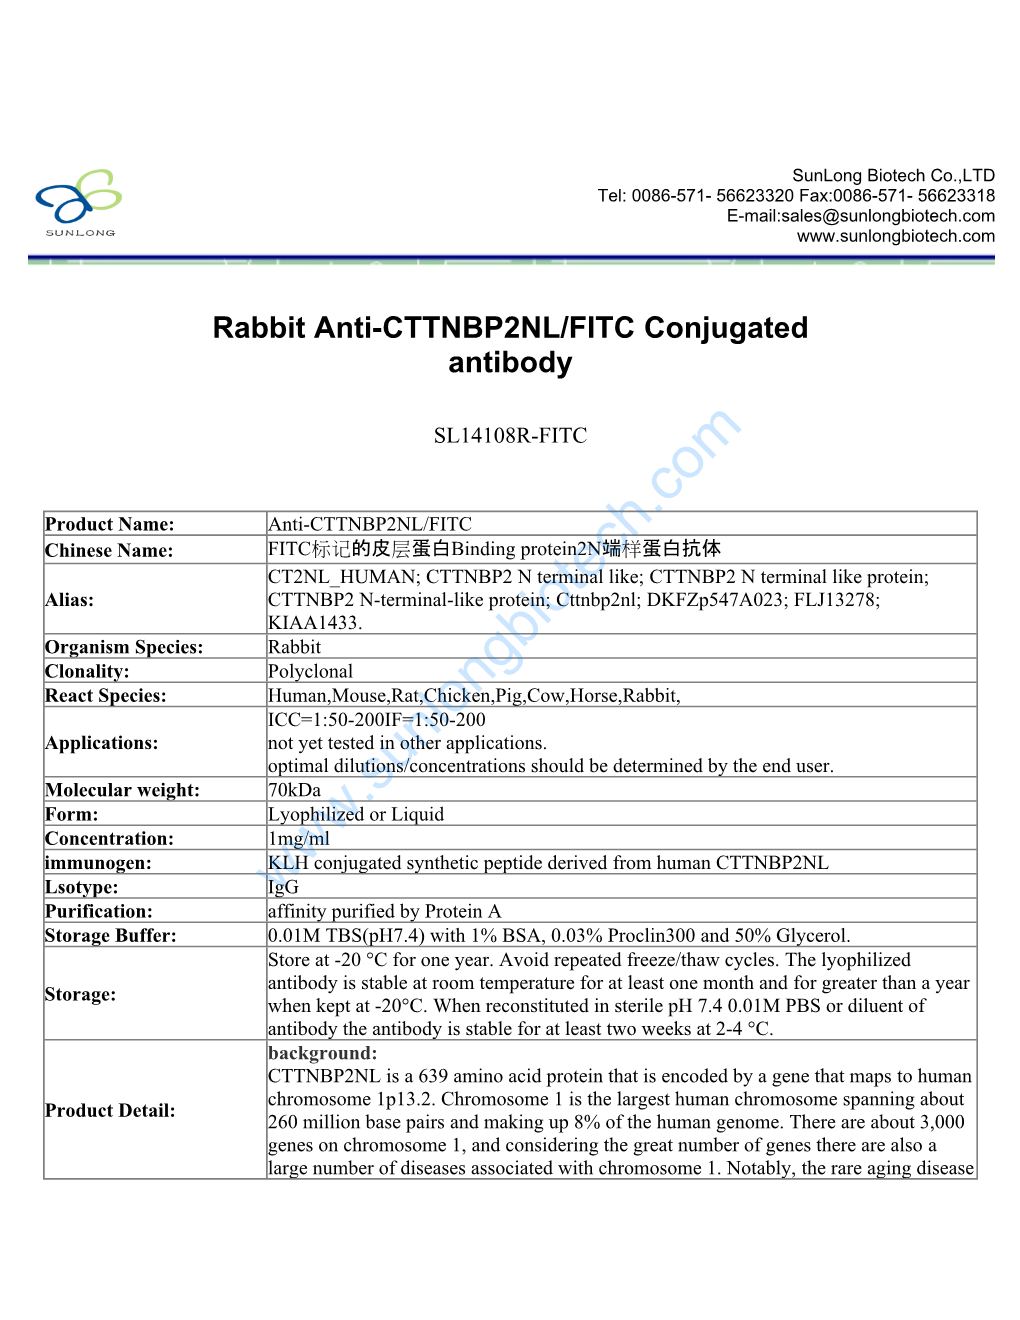 Rabbit Anti-CTTNBP2NL/FITC Conjugated Antibody-SL14108R